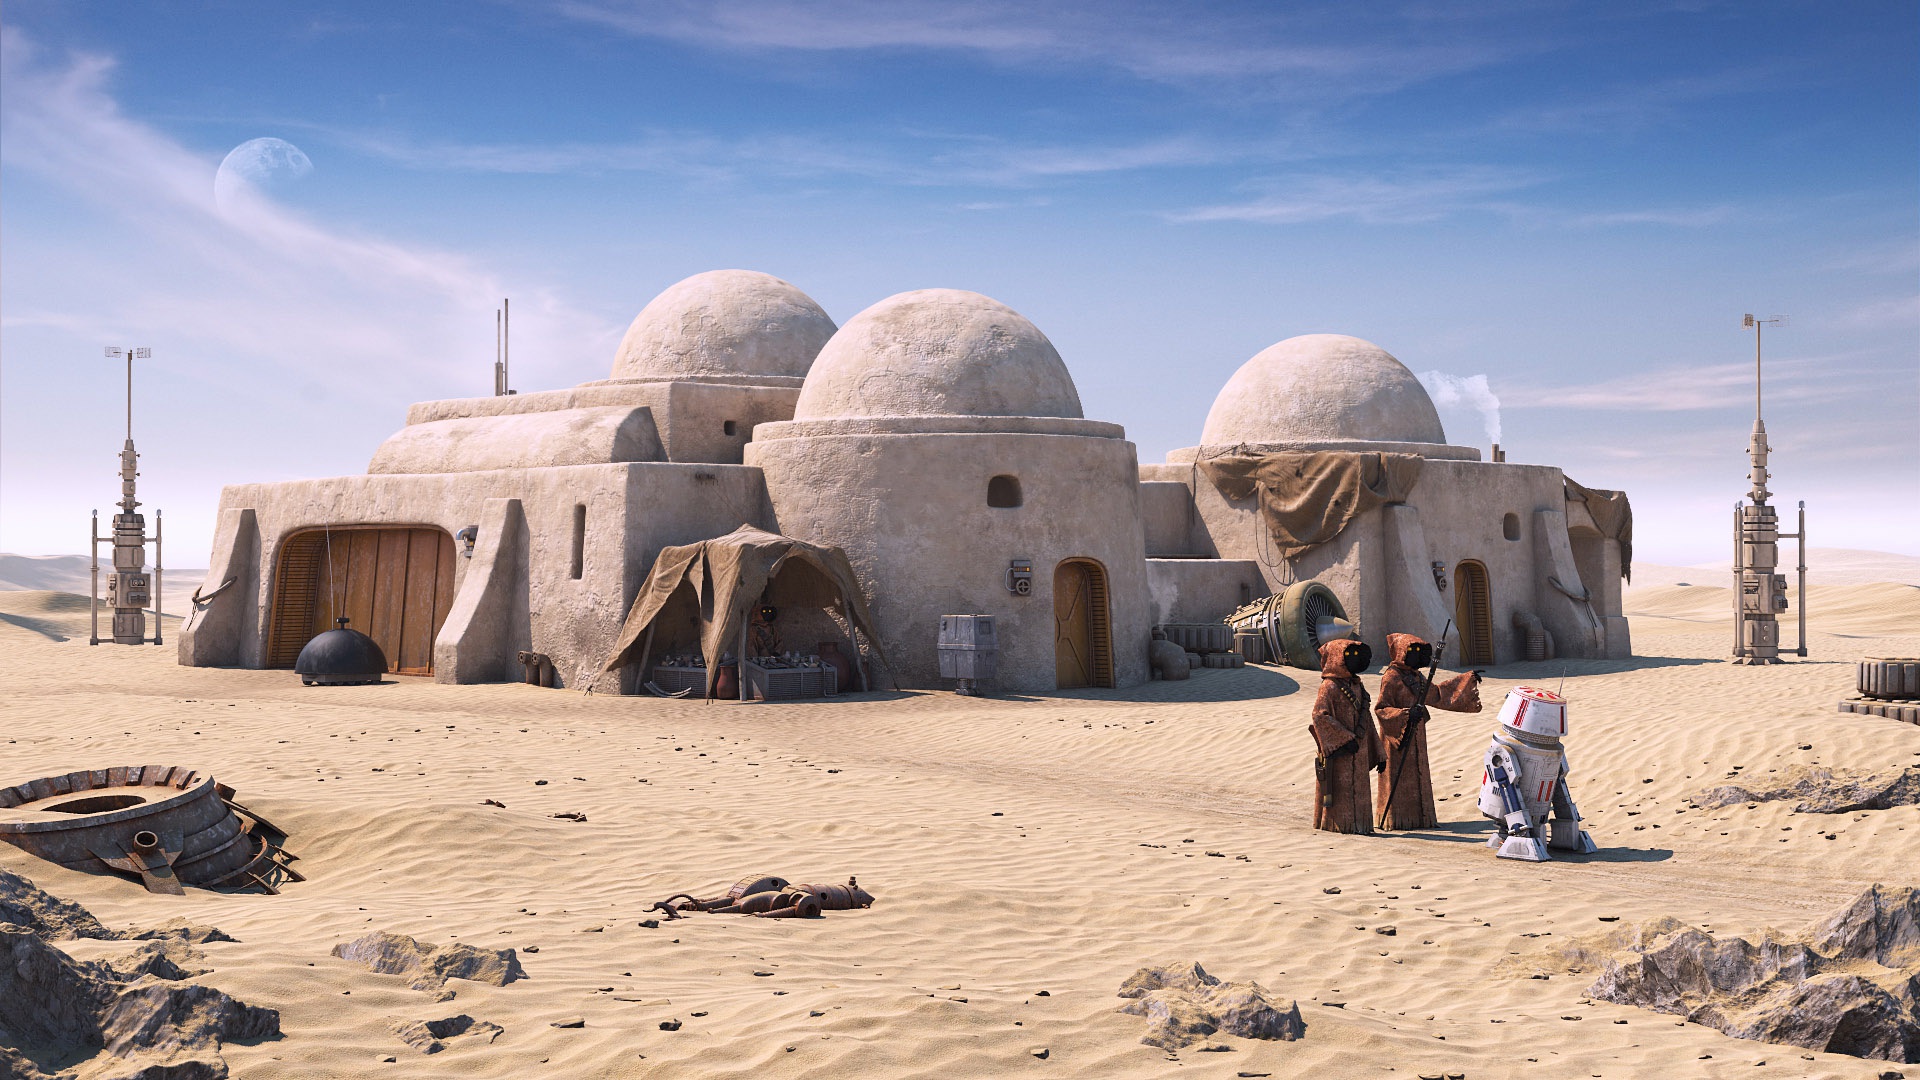 8k Tatooine (Star Wars) Images